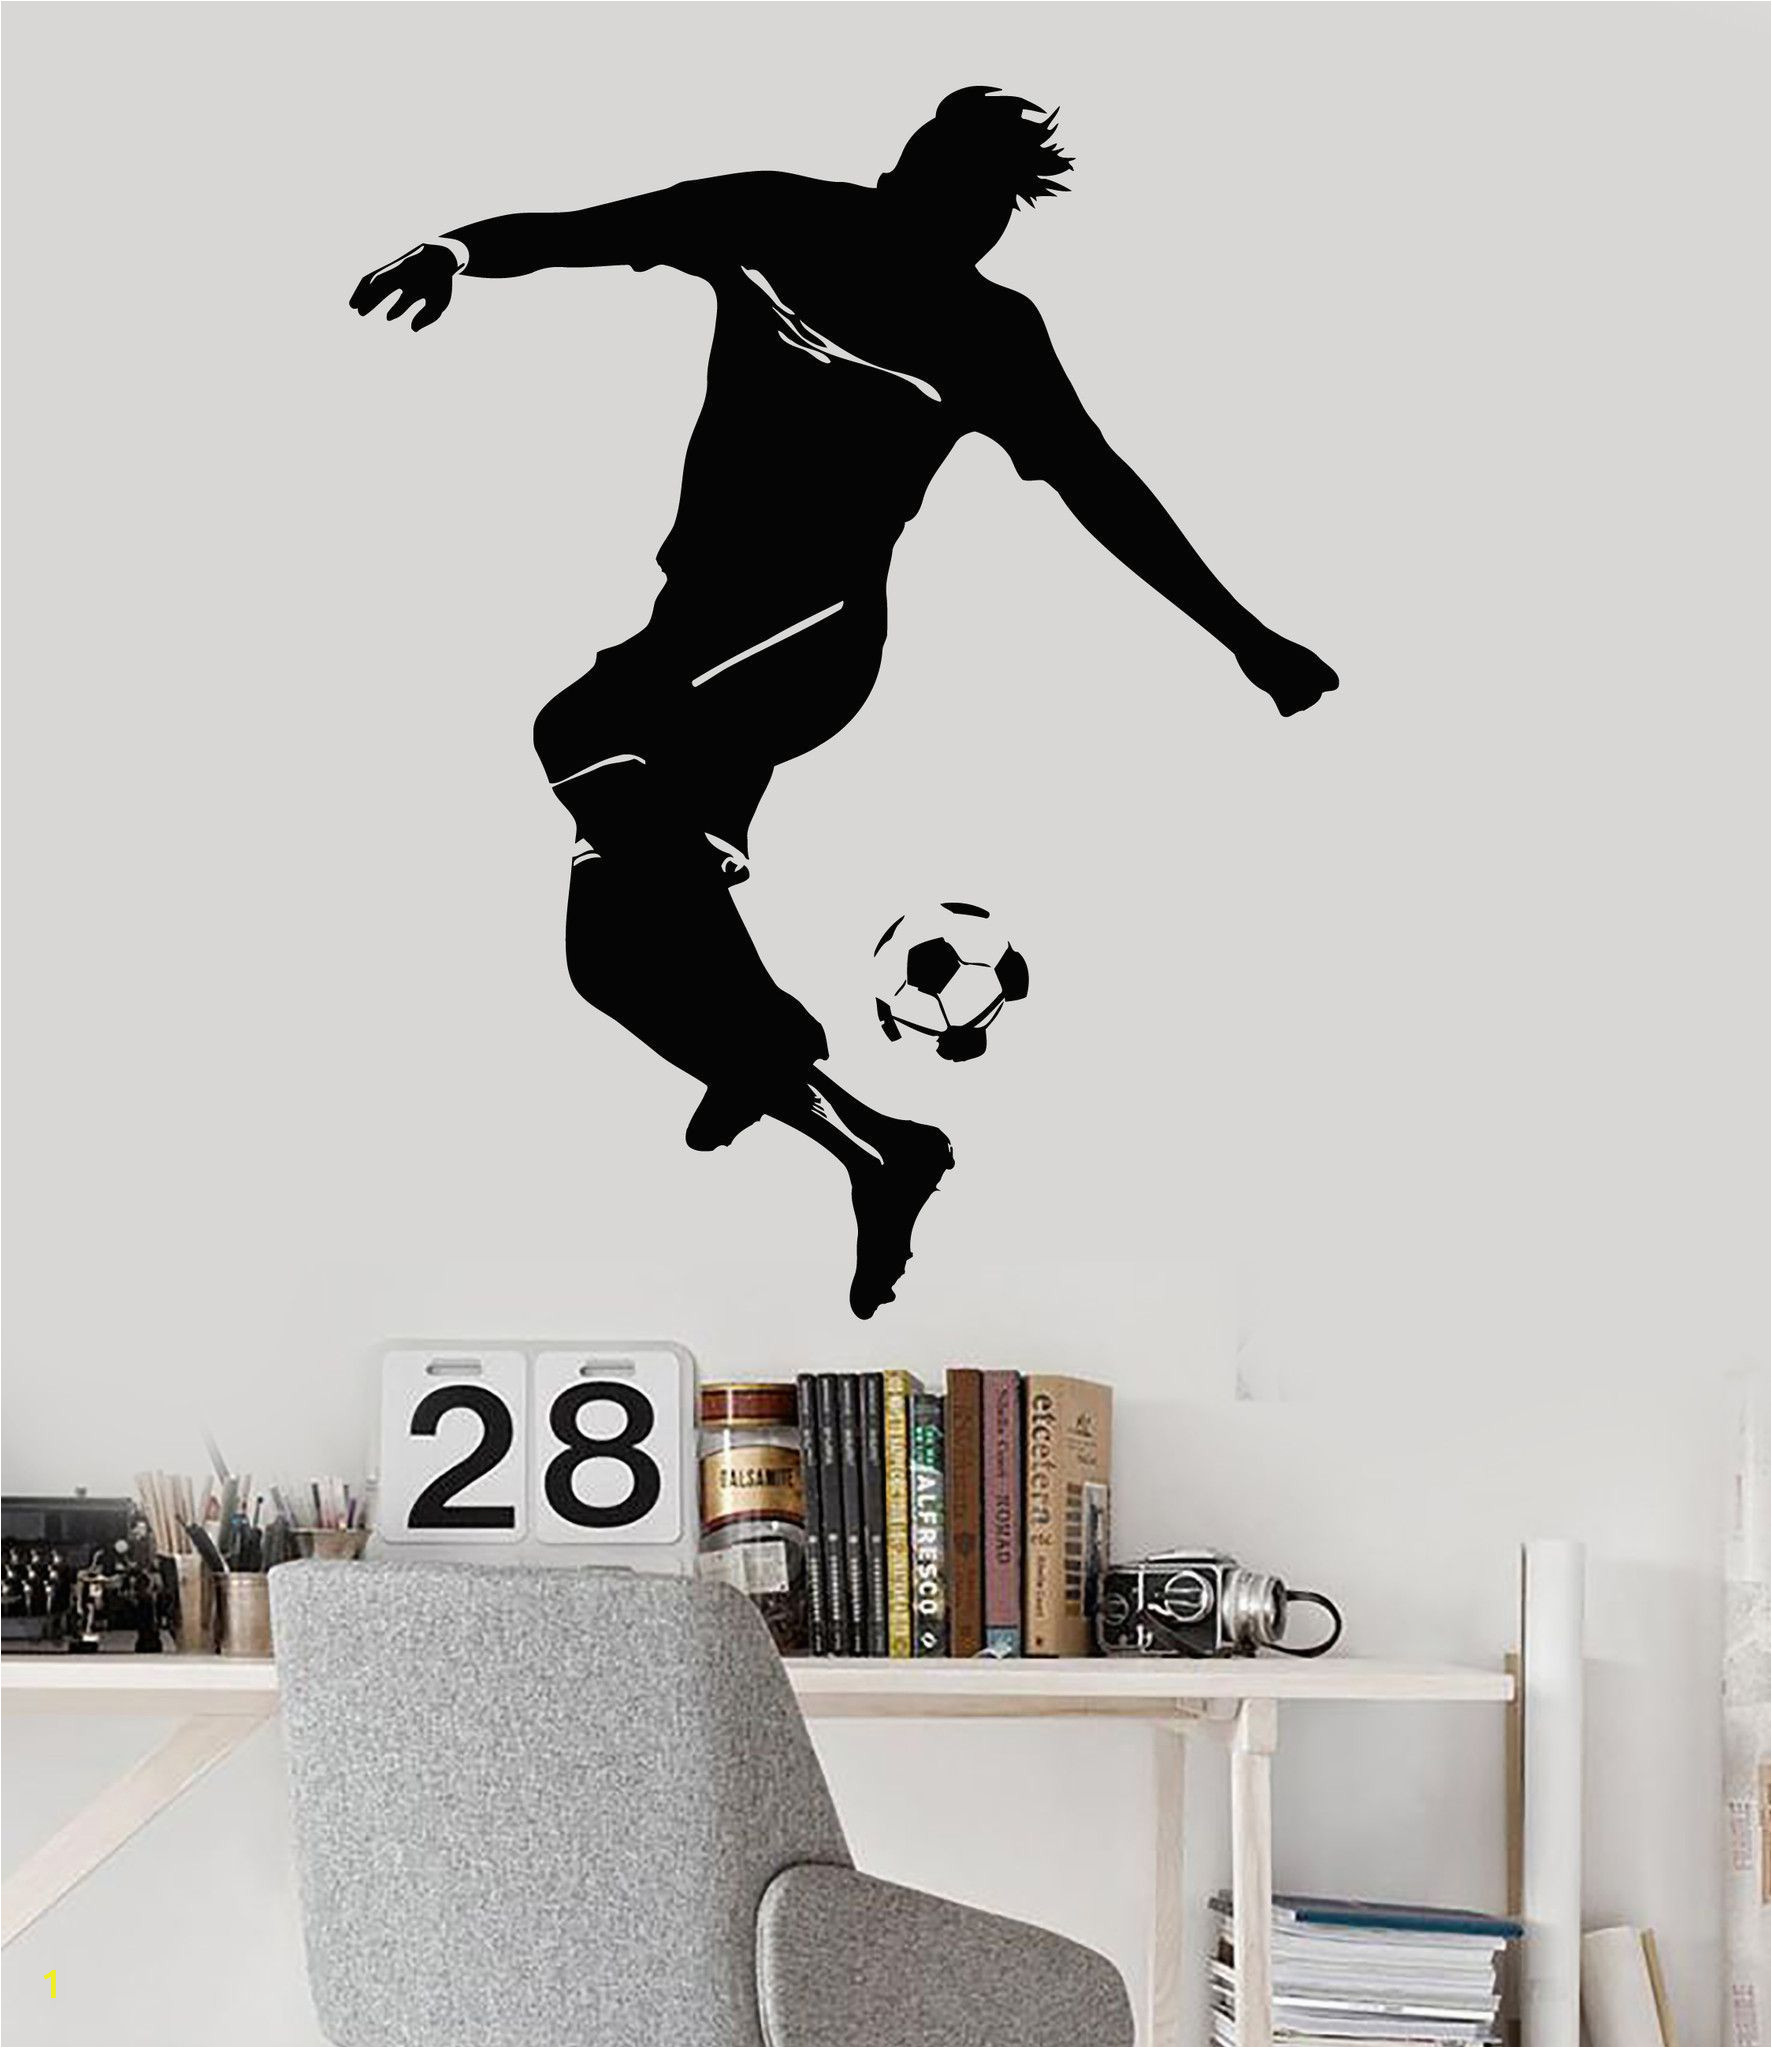 Soccer Ball Wall Mural Vinyl Wall Decal soccer Player Ball Boys Room Sports